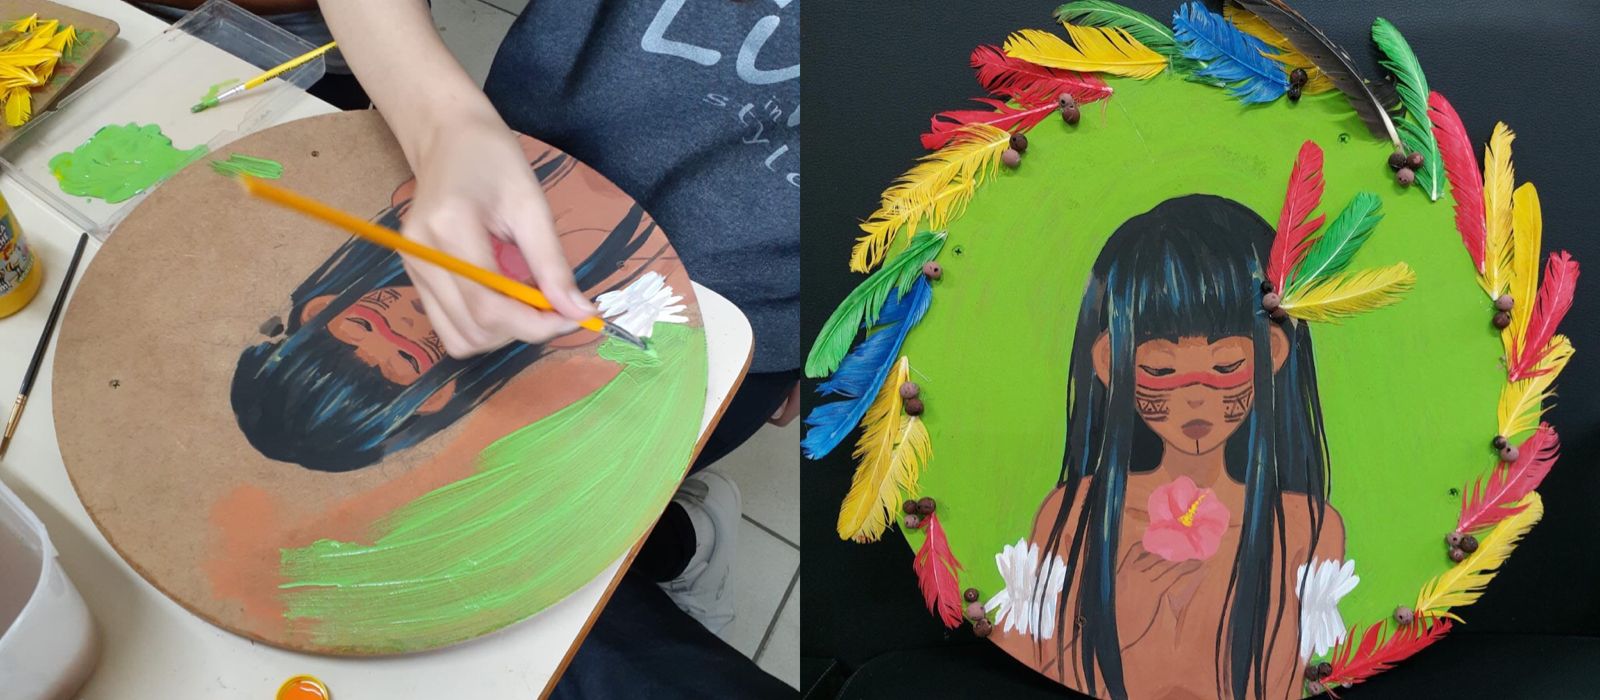 Estudantes da EEB Gracinda kkkkkkk fizeram arte representando a cultura indígena